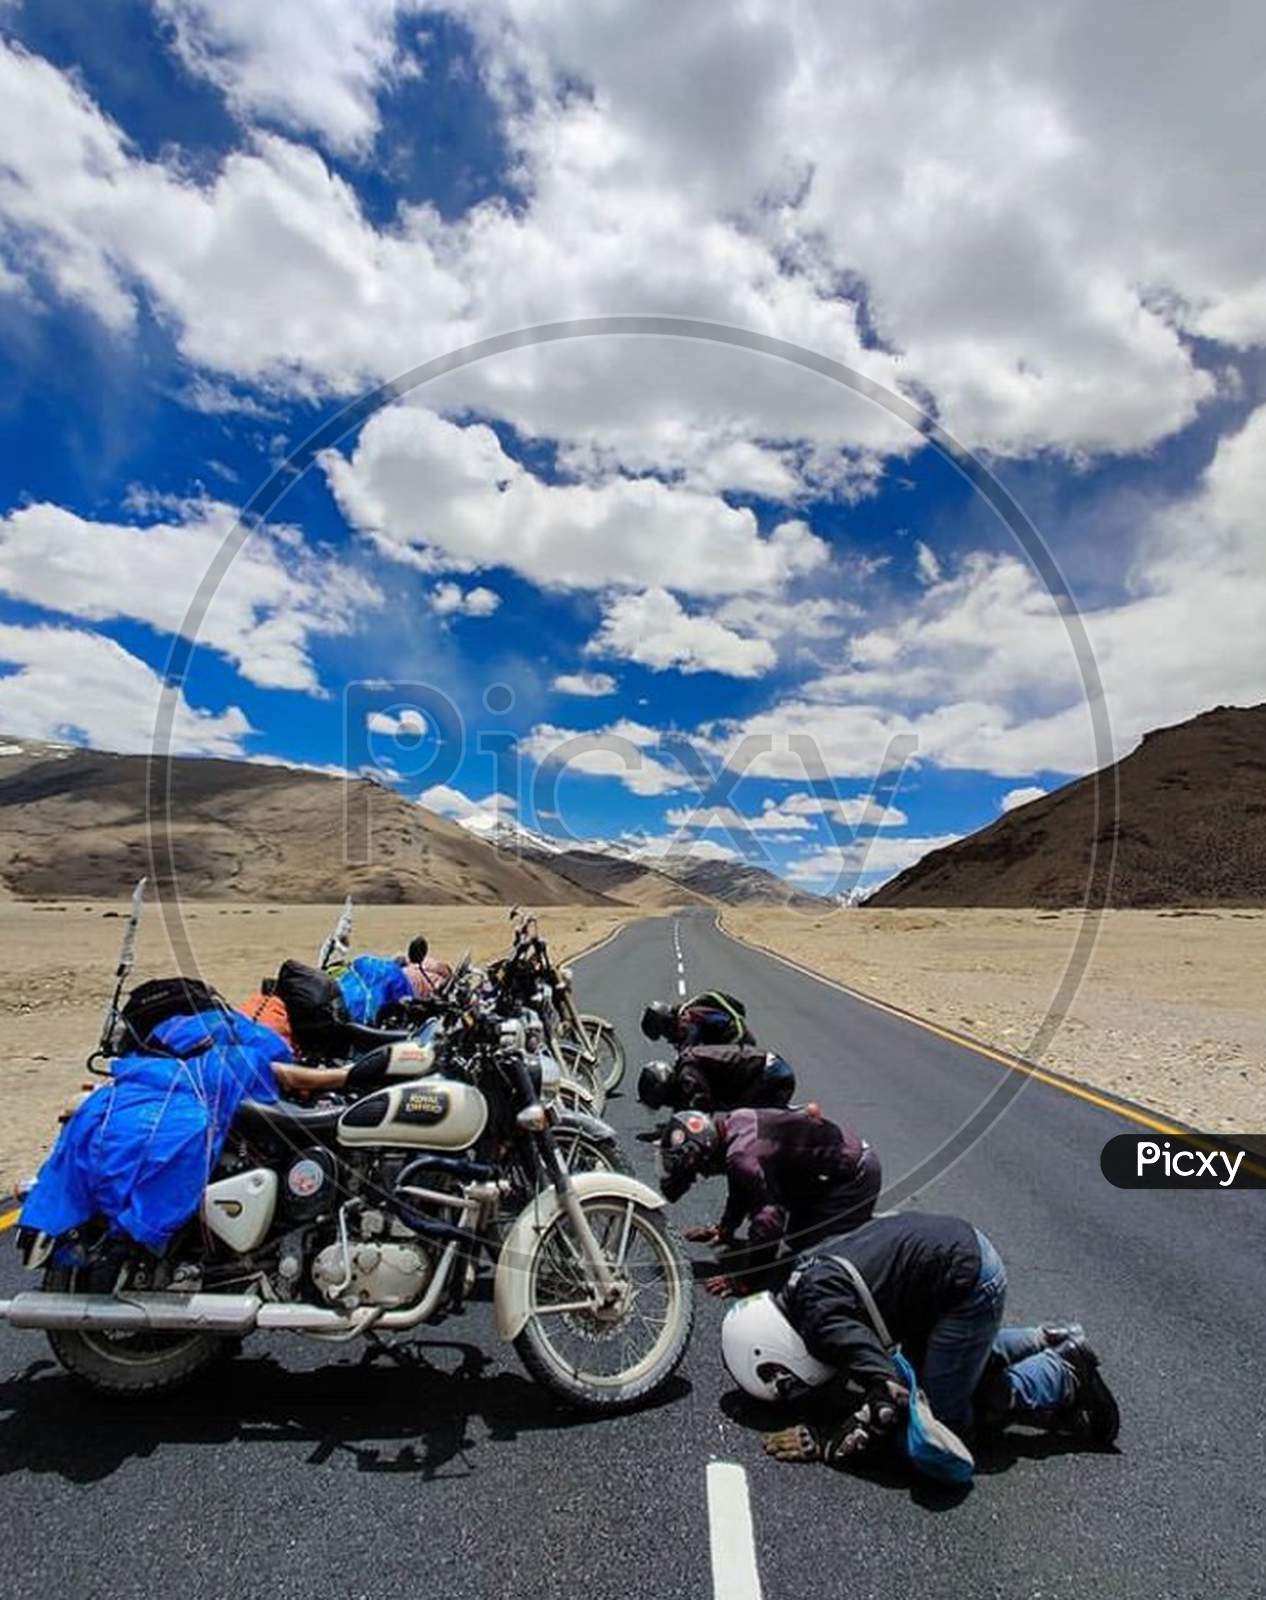 999 Leh Ladakh Pictures  Download Free Images on Unsplash